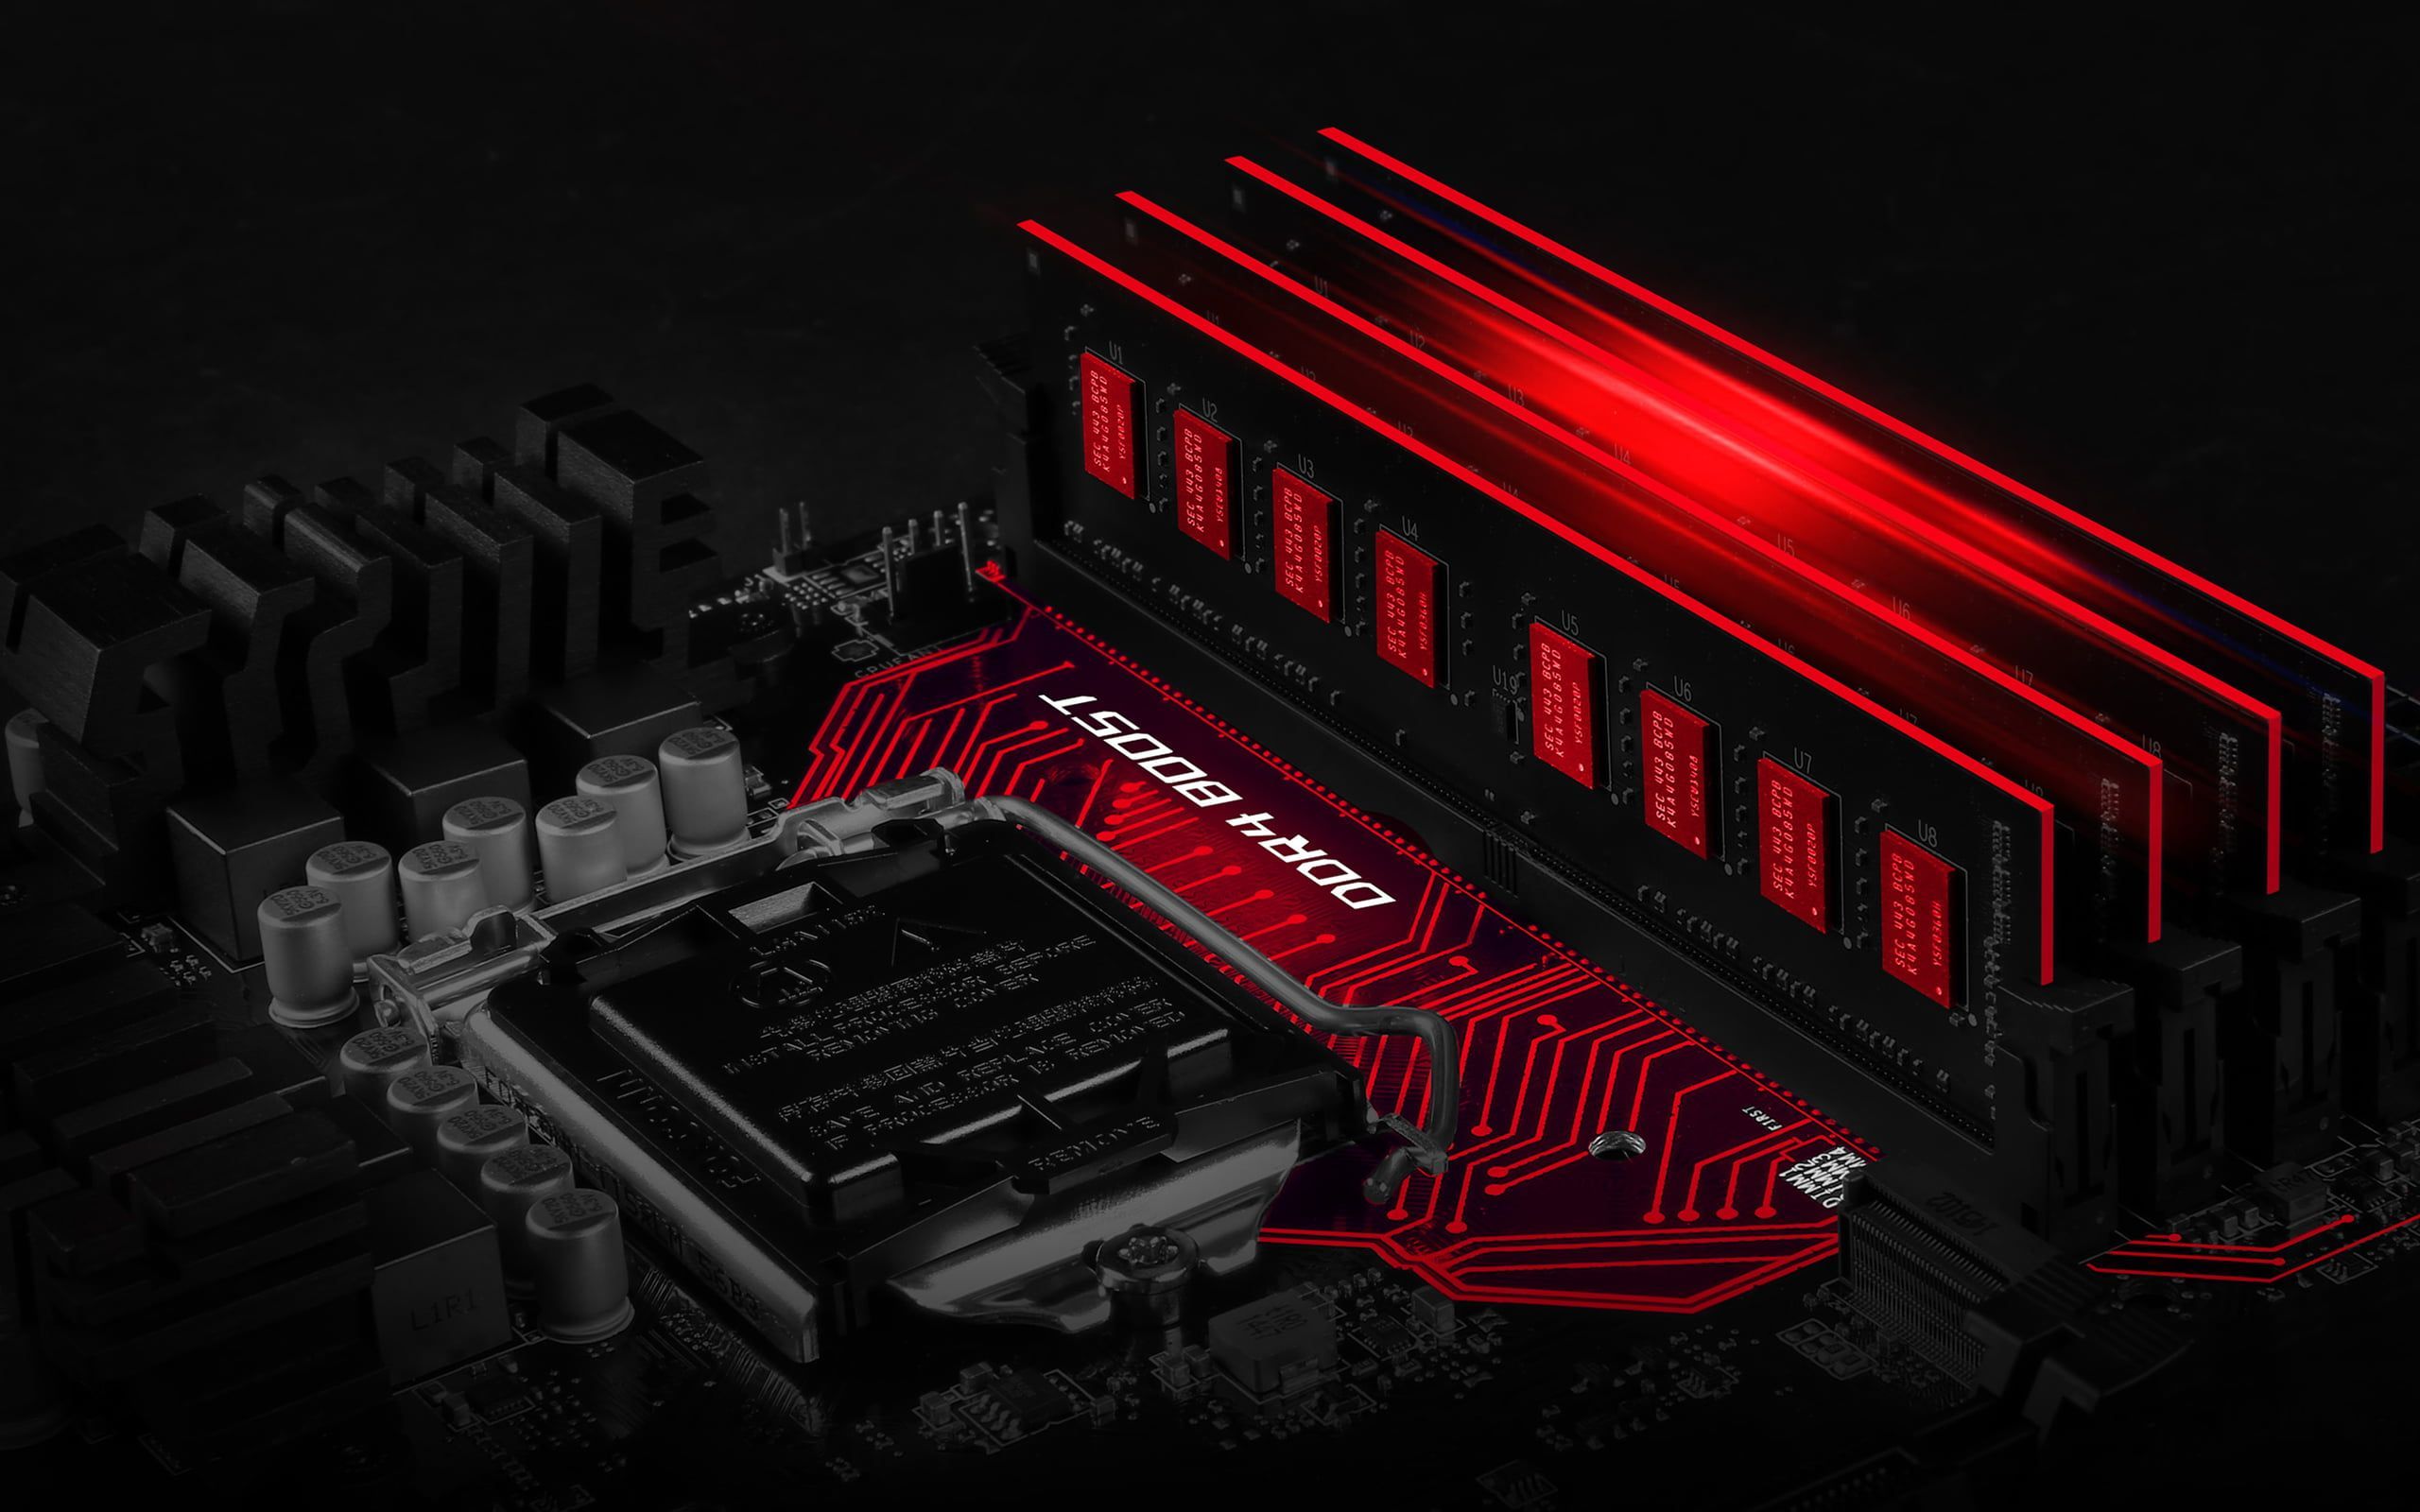 black and red motherboard PC gaming #motherboards #MSI #computer #technology RAM (Computing) K #wallp. Papel de parede celular, Parede celular, Papeis de parede